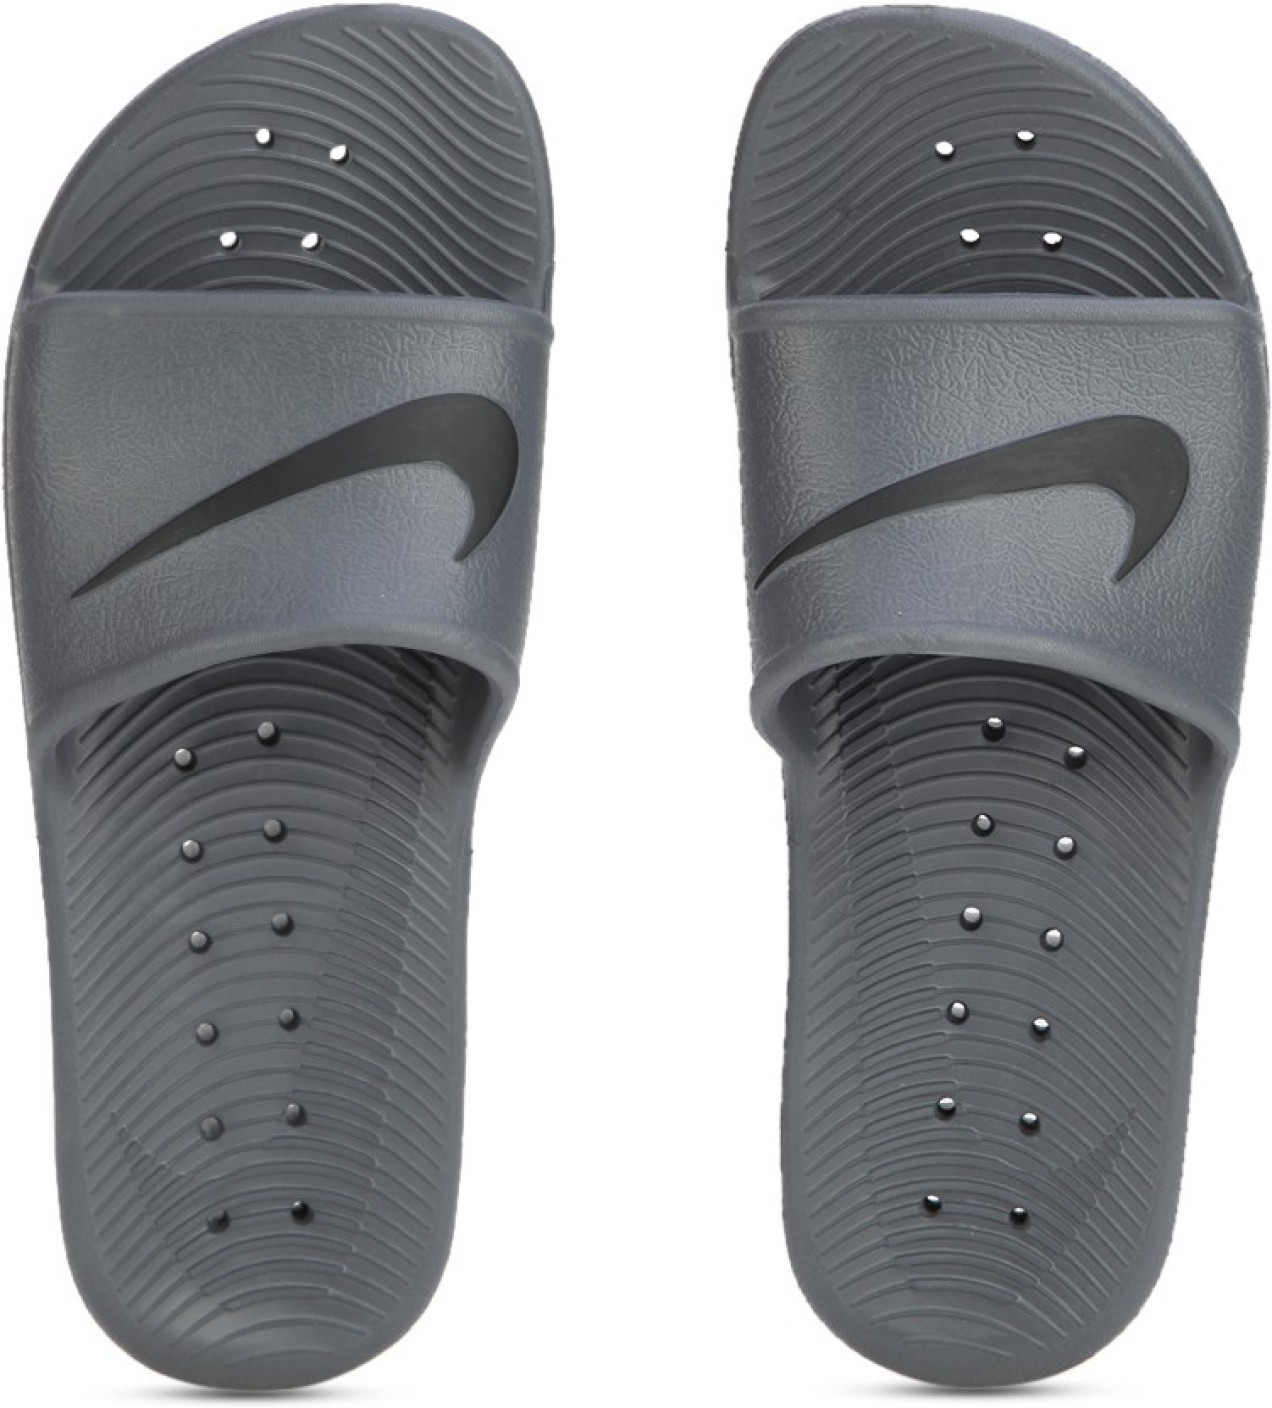  Nike  KAWA SHOWER Slides  Buy DARK GREY BLACK Color Nike  